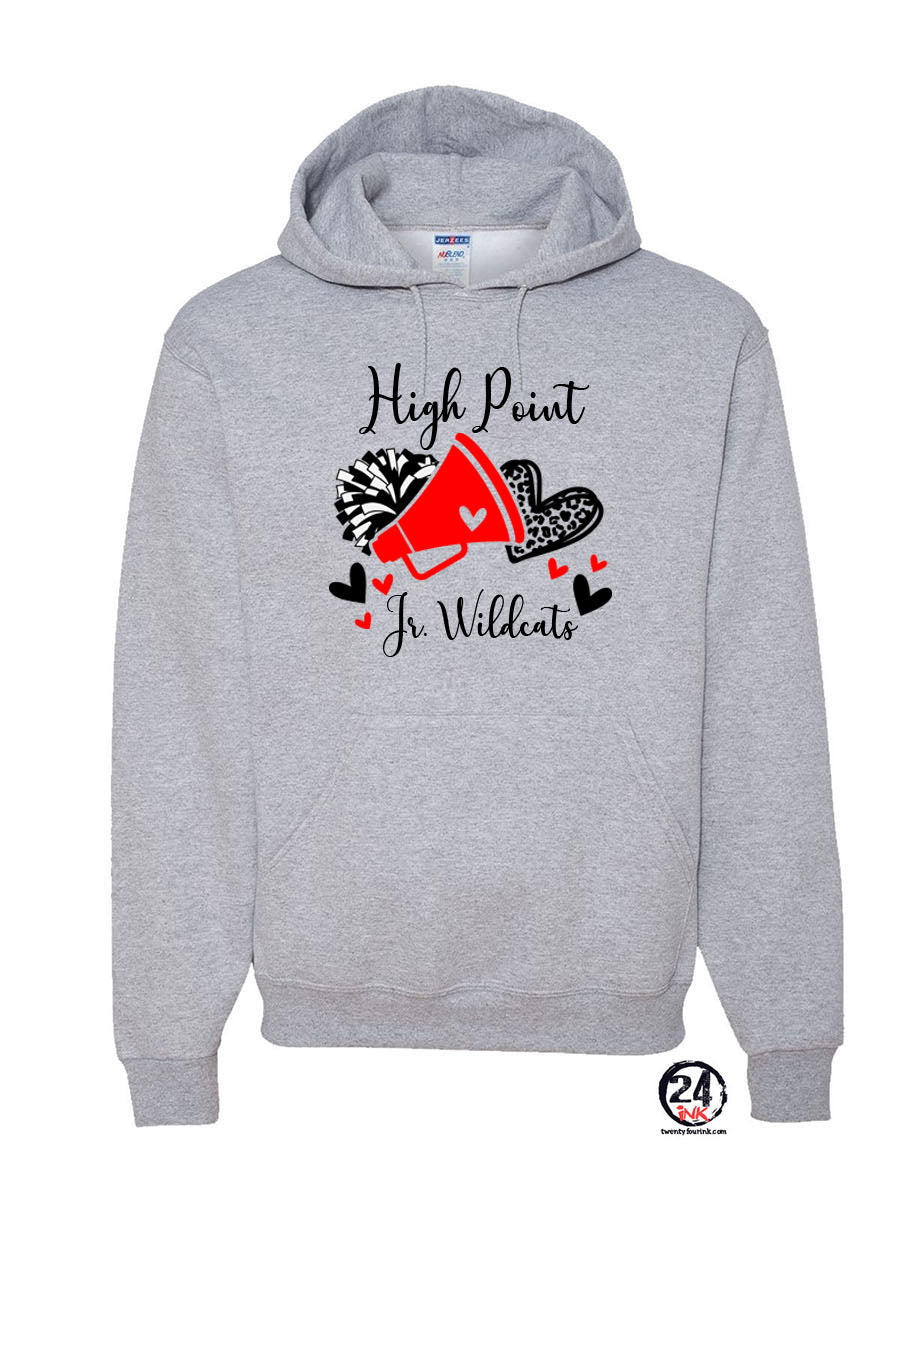 High Point Cheer Design 6 Hooded Sweatshirt